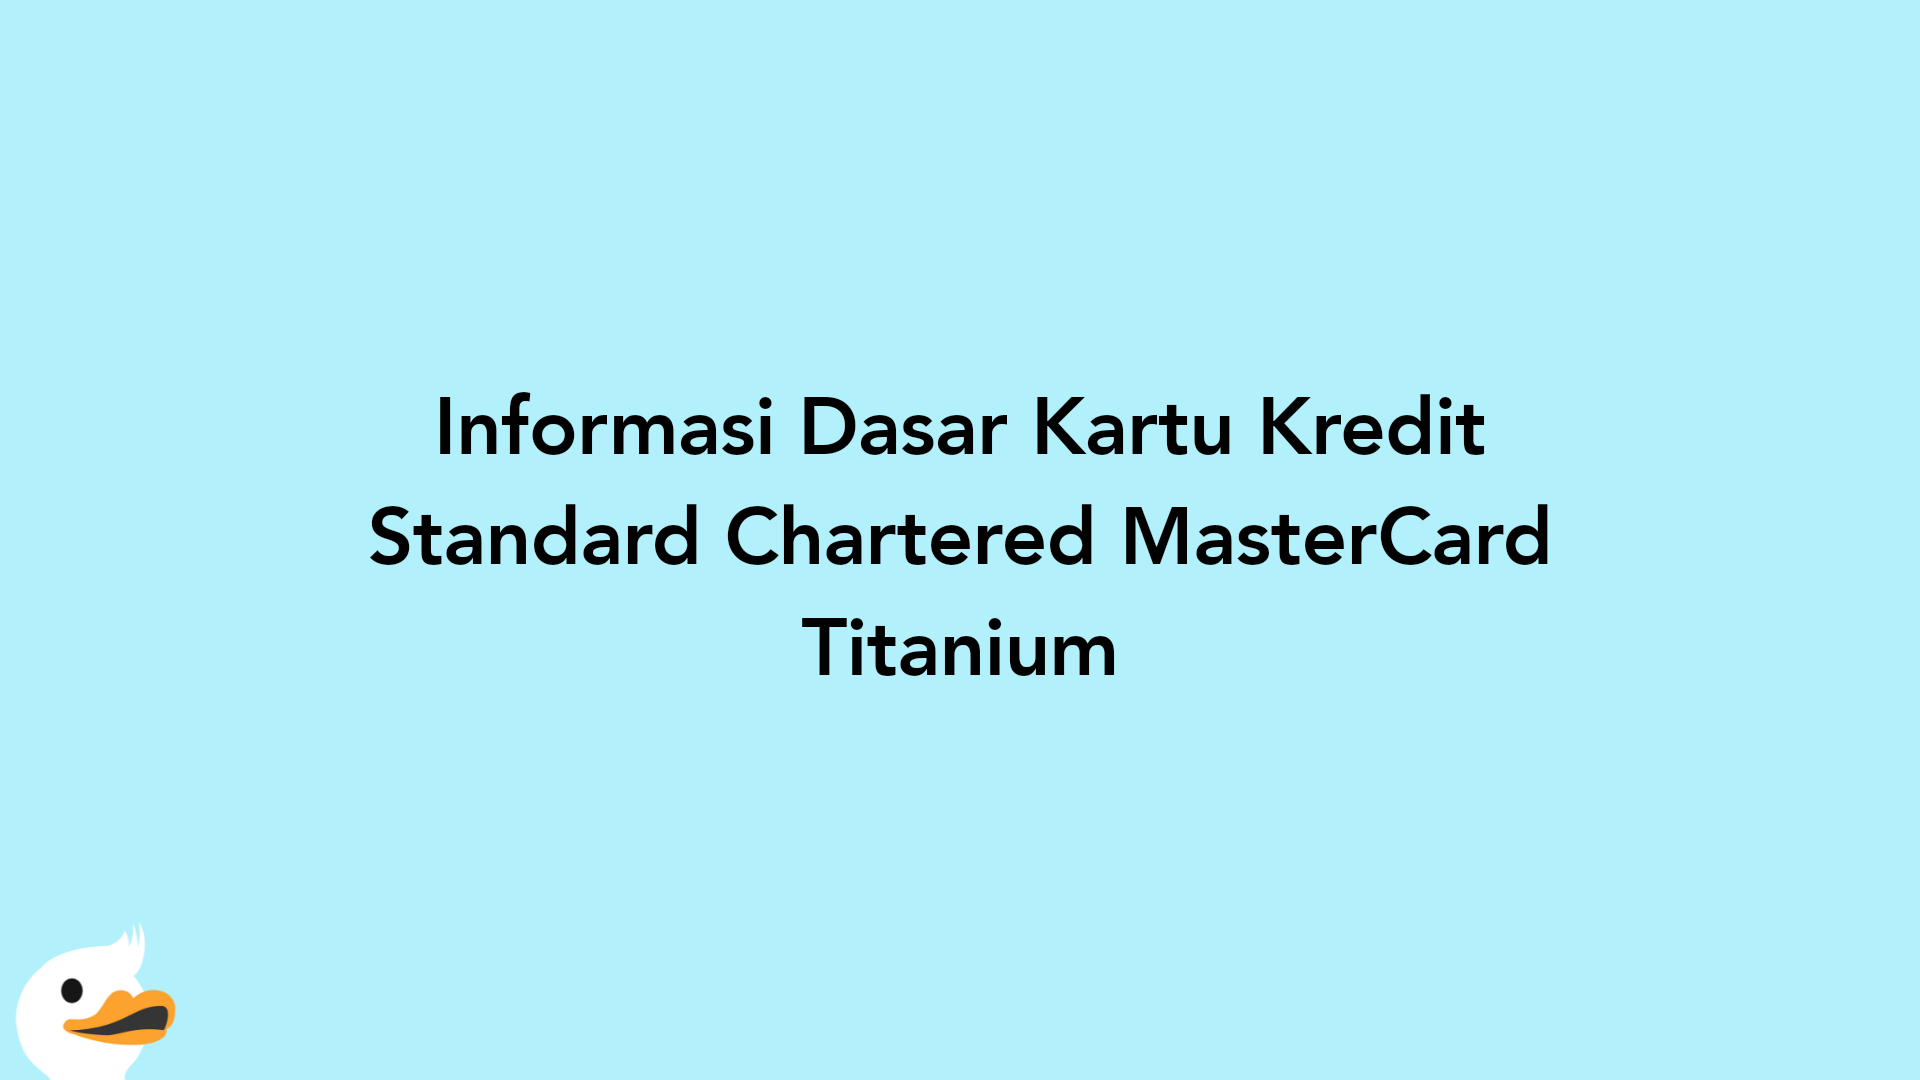 Informasi Dasar Kartu Kredit Standard Chartered MasterCard Titanium